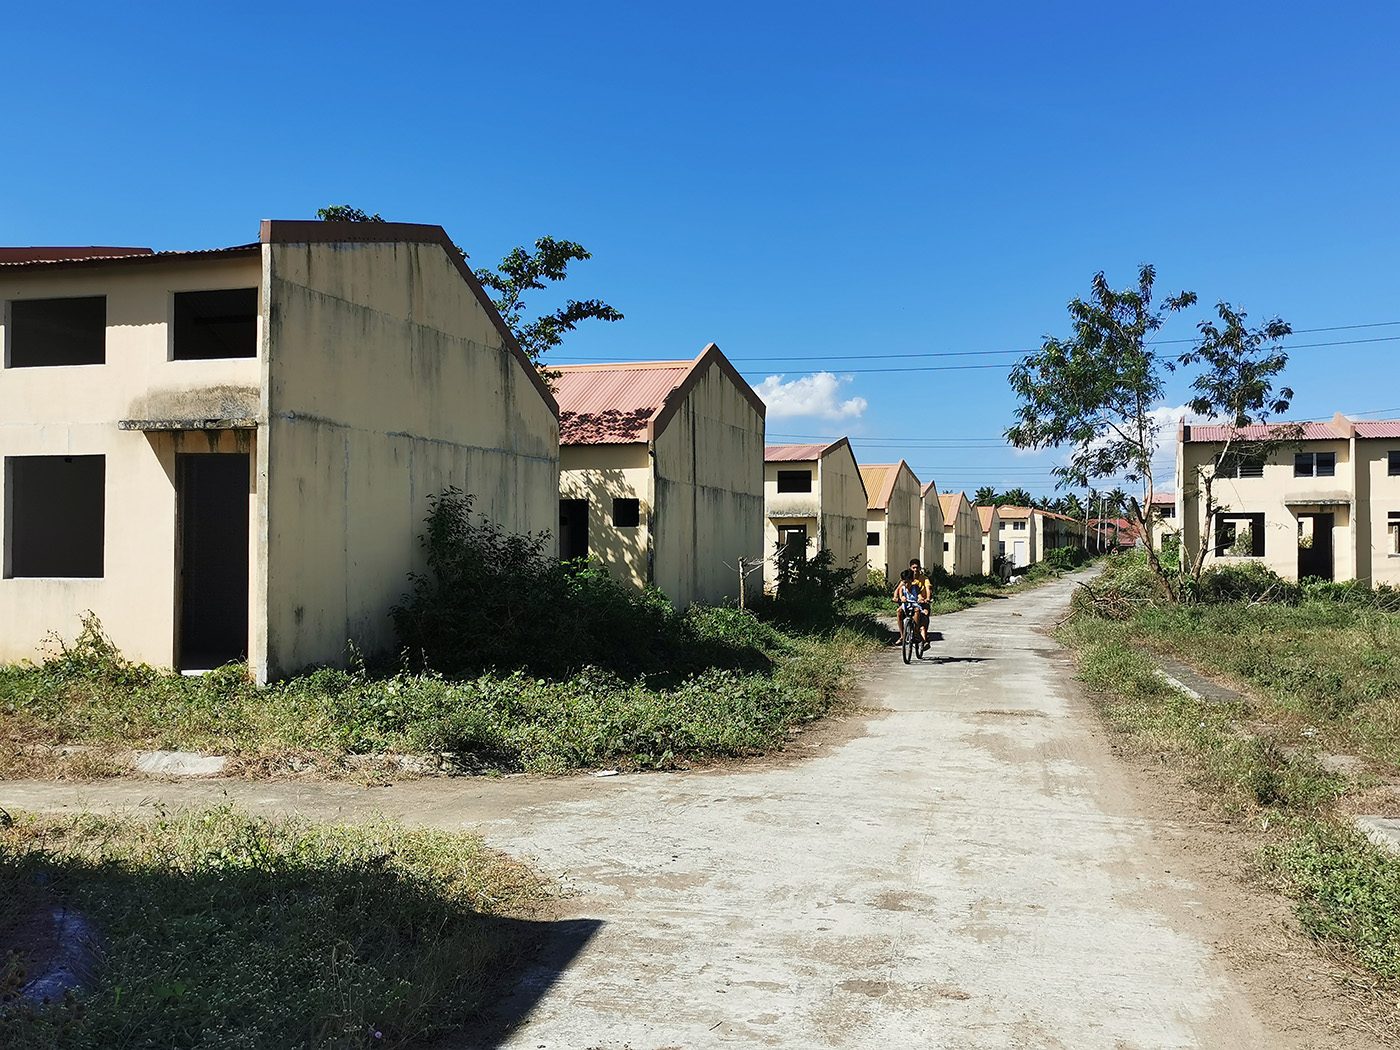 LOOK: Eyed relocation site for Taal evacuees in Ibaan, Batangas